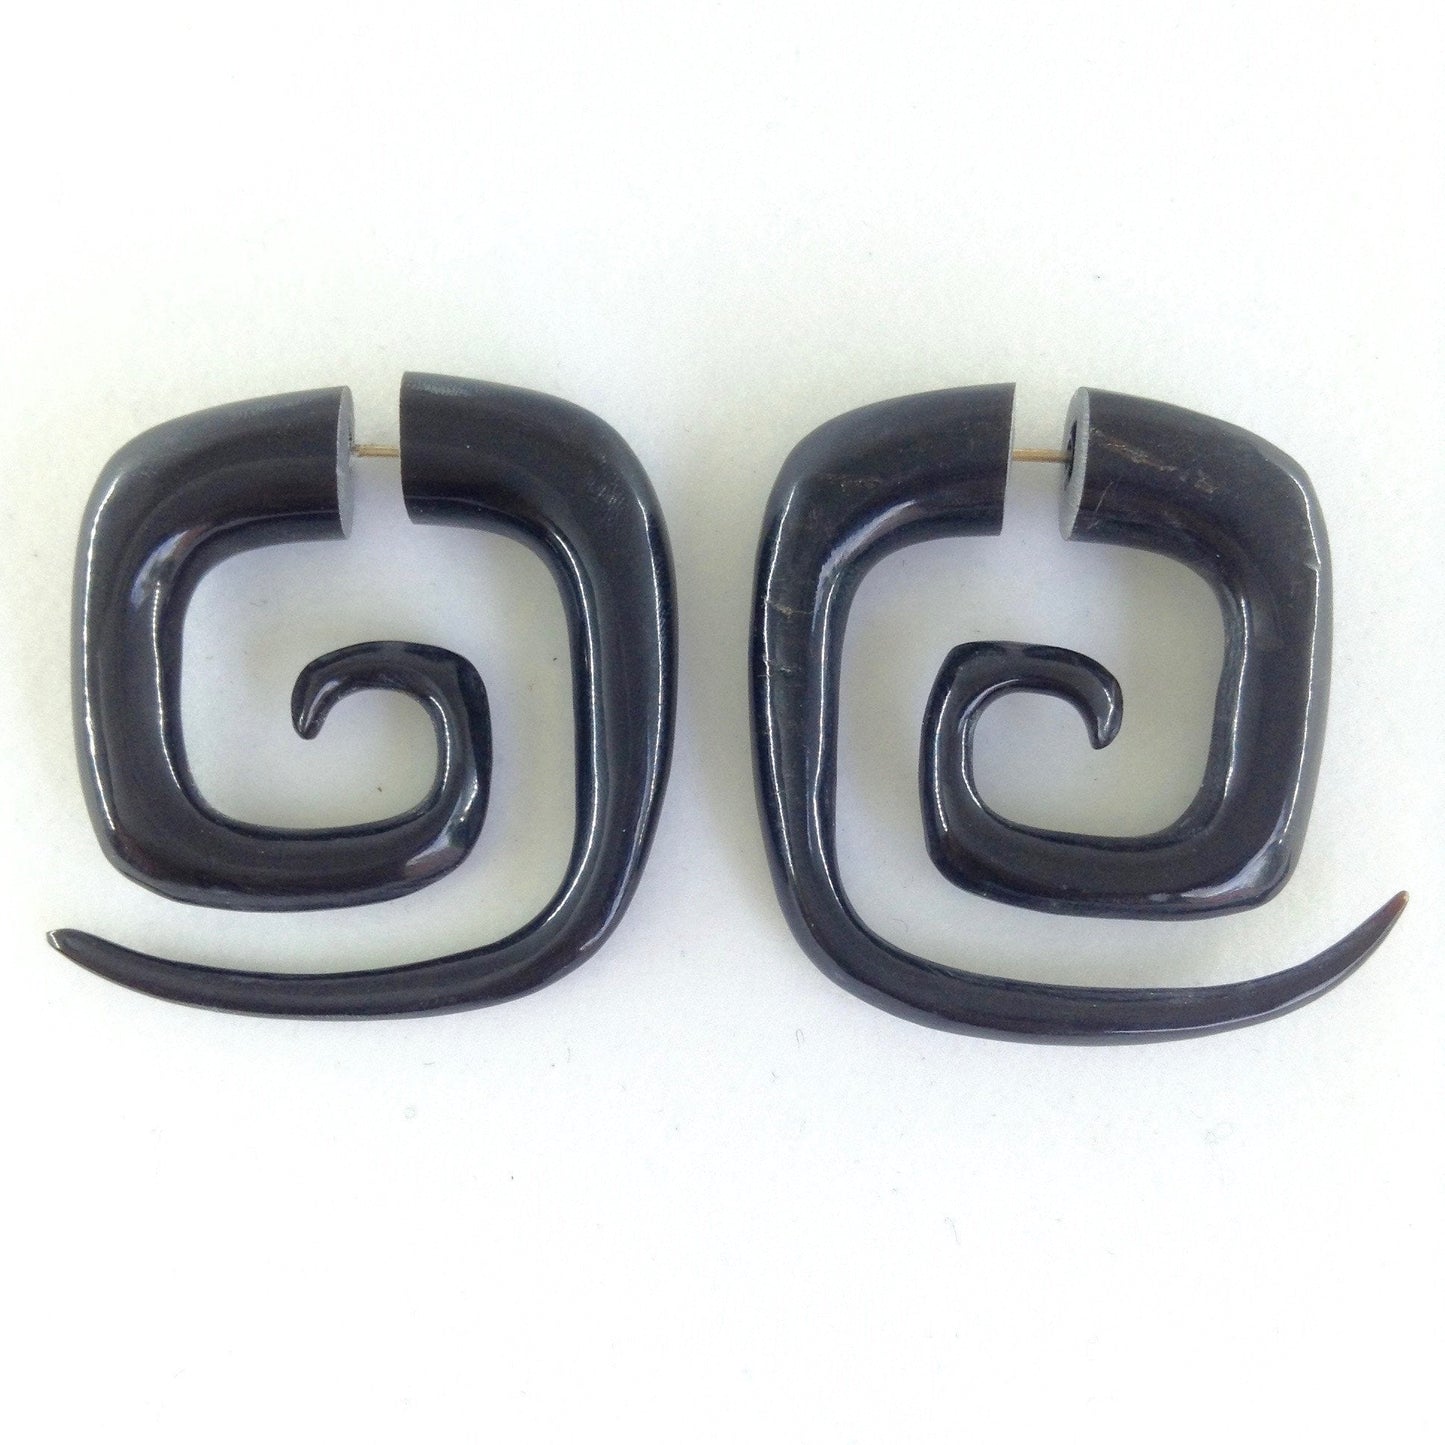 Fake Gauges :|: Square Island Spiral tribal earrings. Horn.